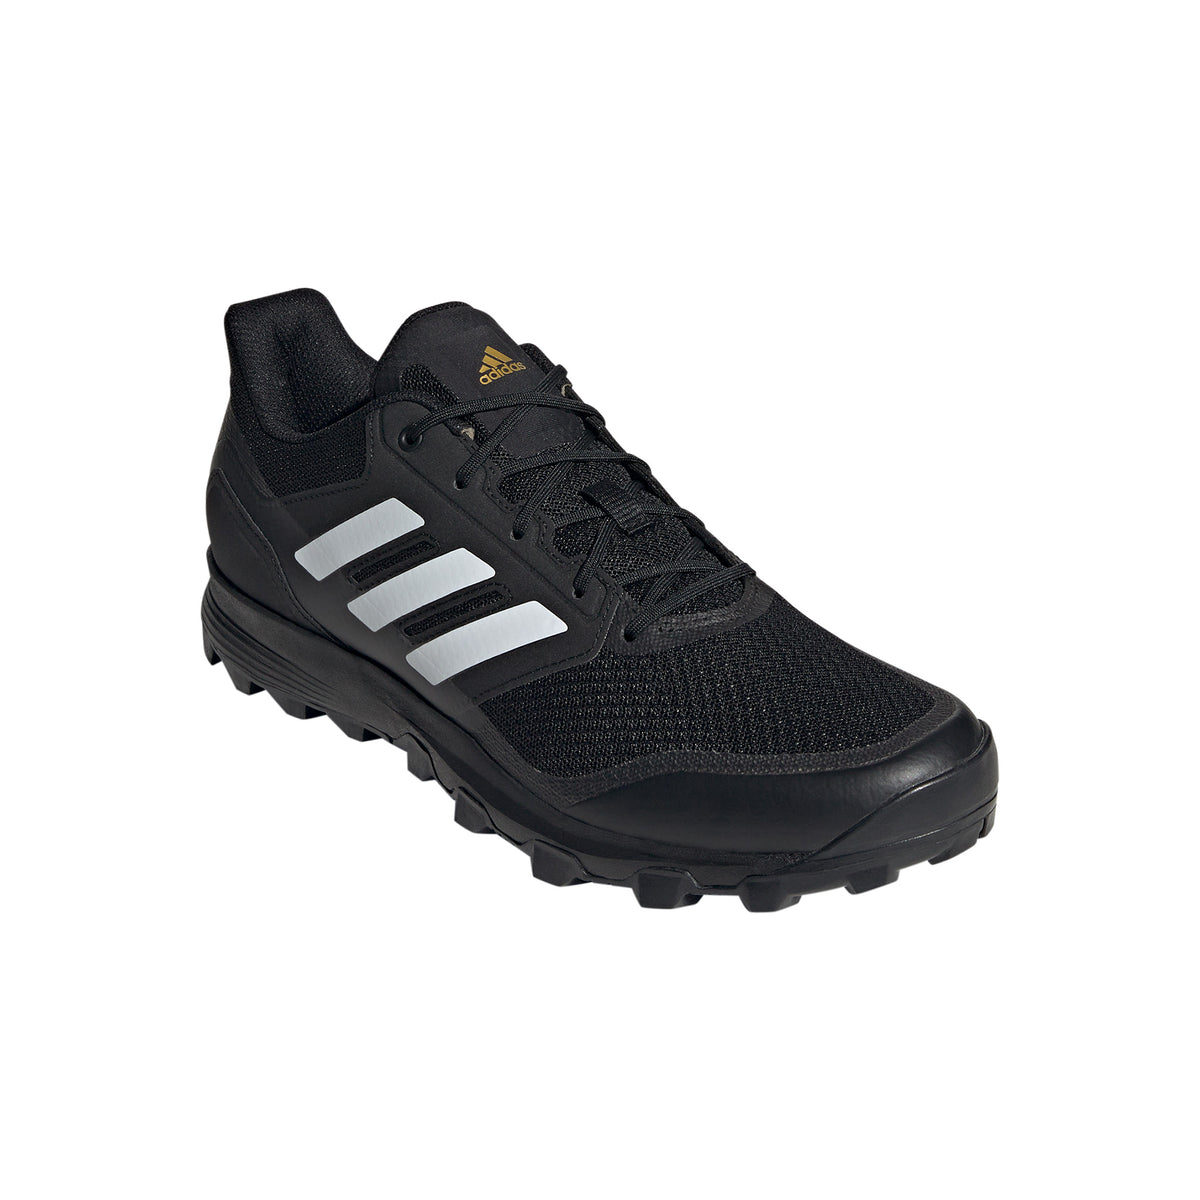 Adidas Flexcloud 2.1 Hockey Shoes: Black